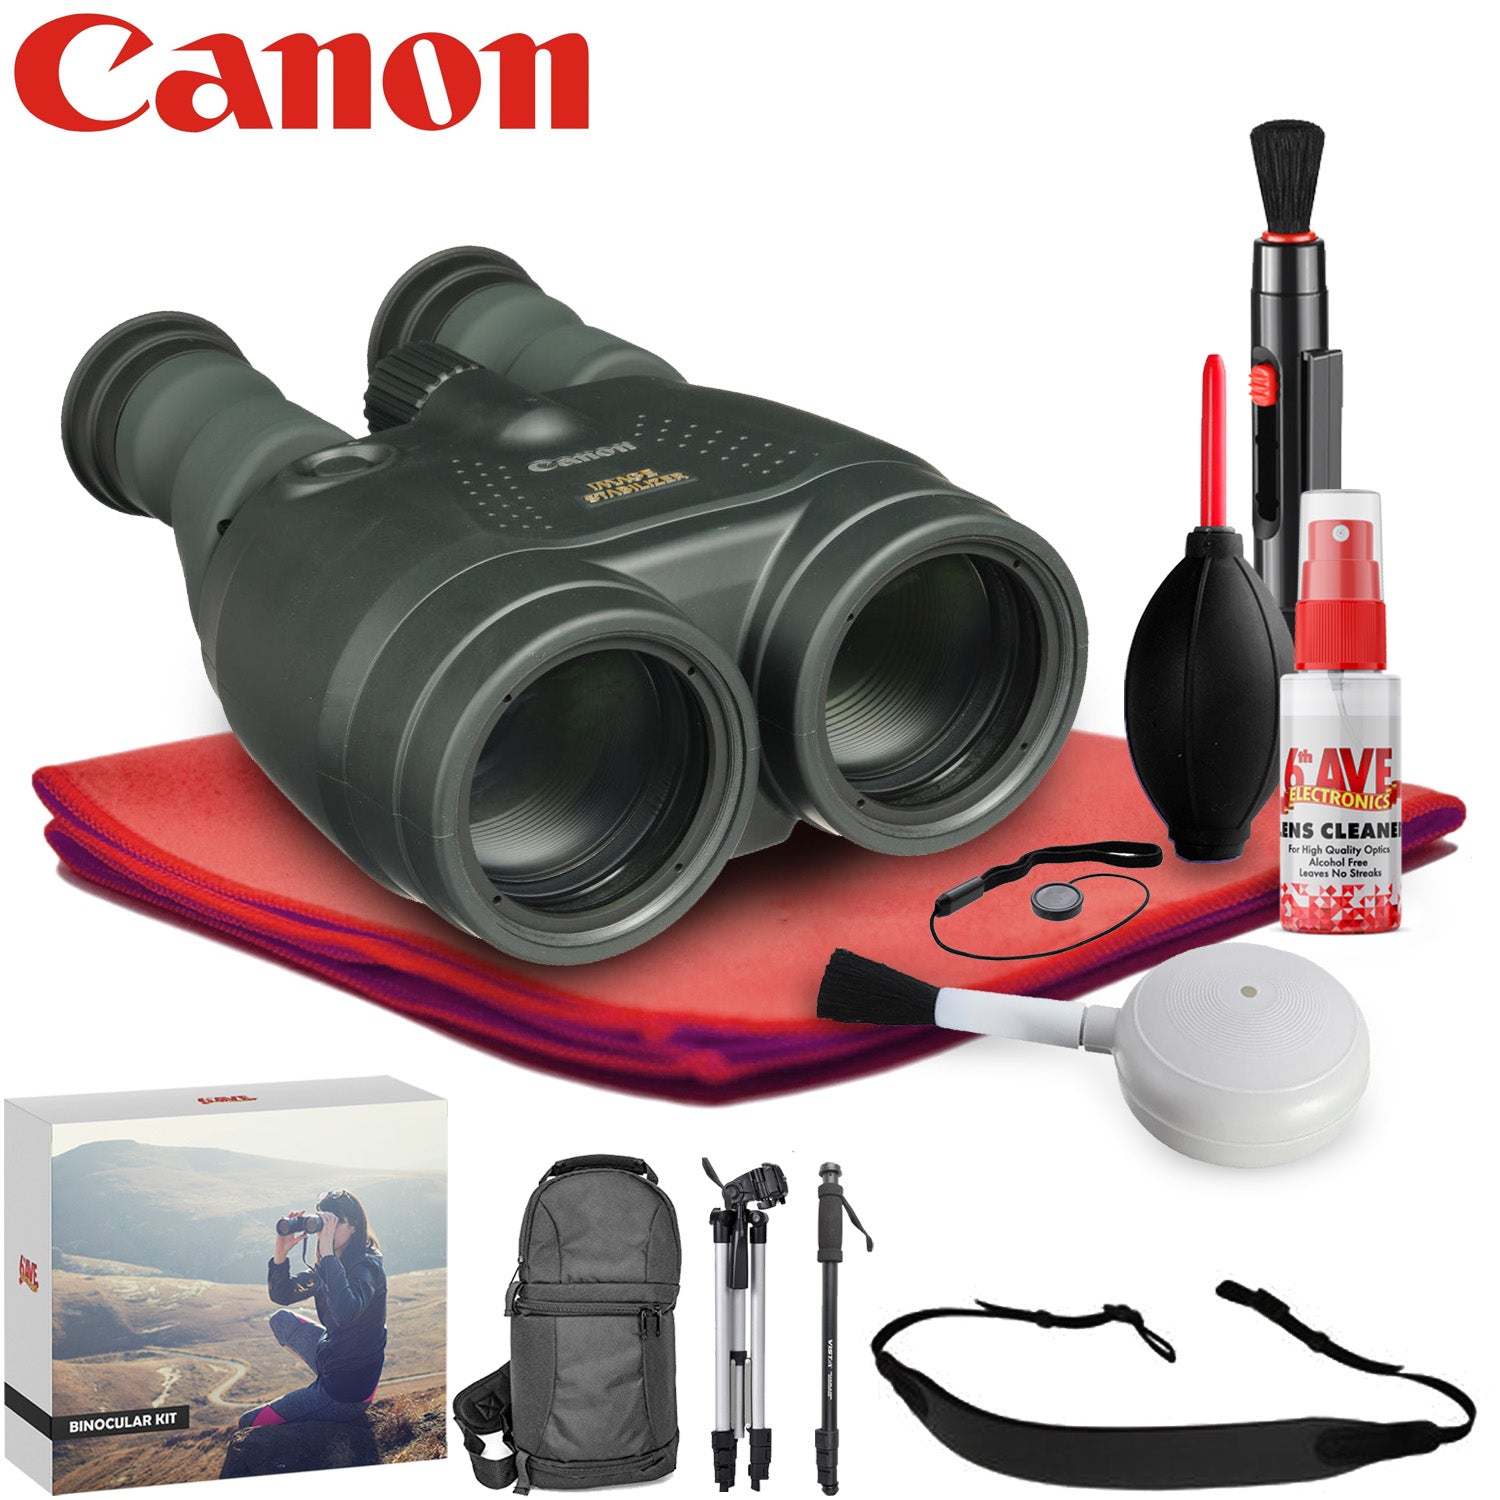 Canon 15x50 IS All-Weather Image Stabilized Binocular - Exclusive Outdoors Binoculars Bundle